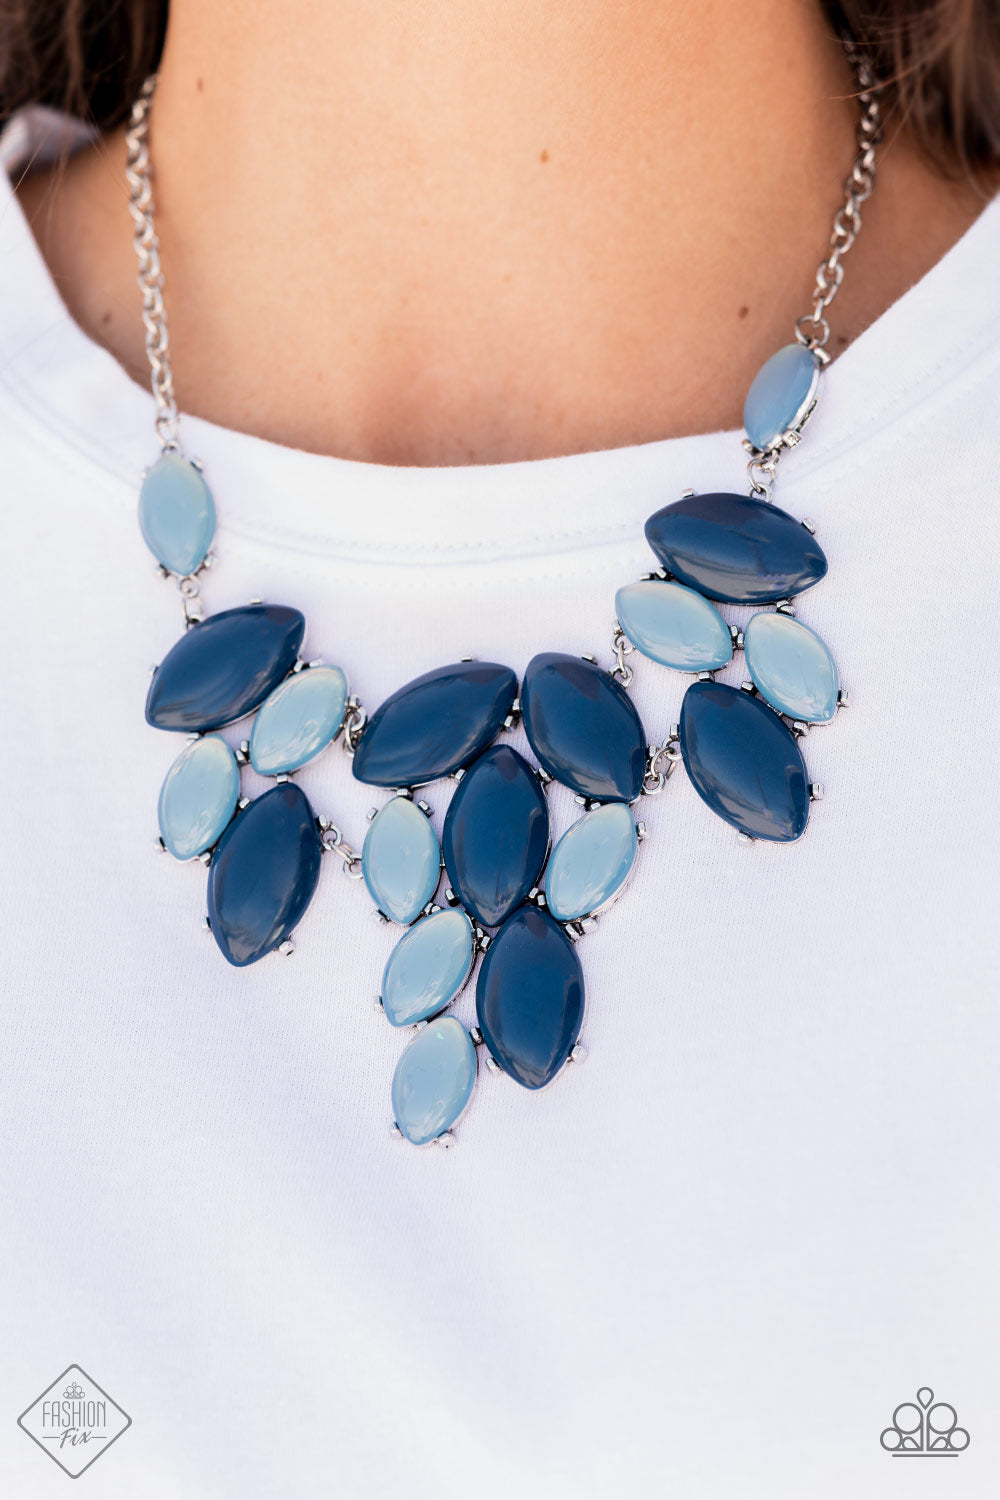 Paparazzi Accessories - Date Night Nouveau - Blue Necklace October Fashion Fix 2021 #GM1021